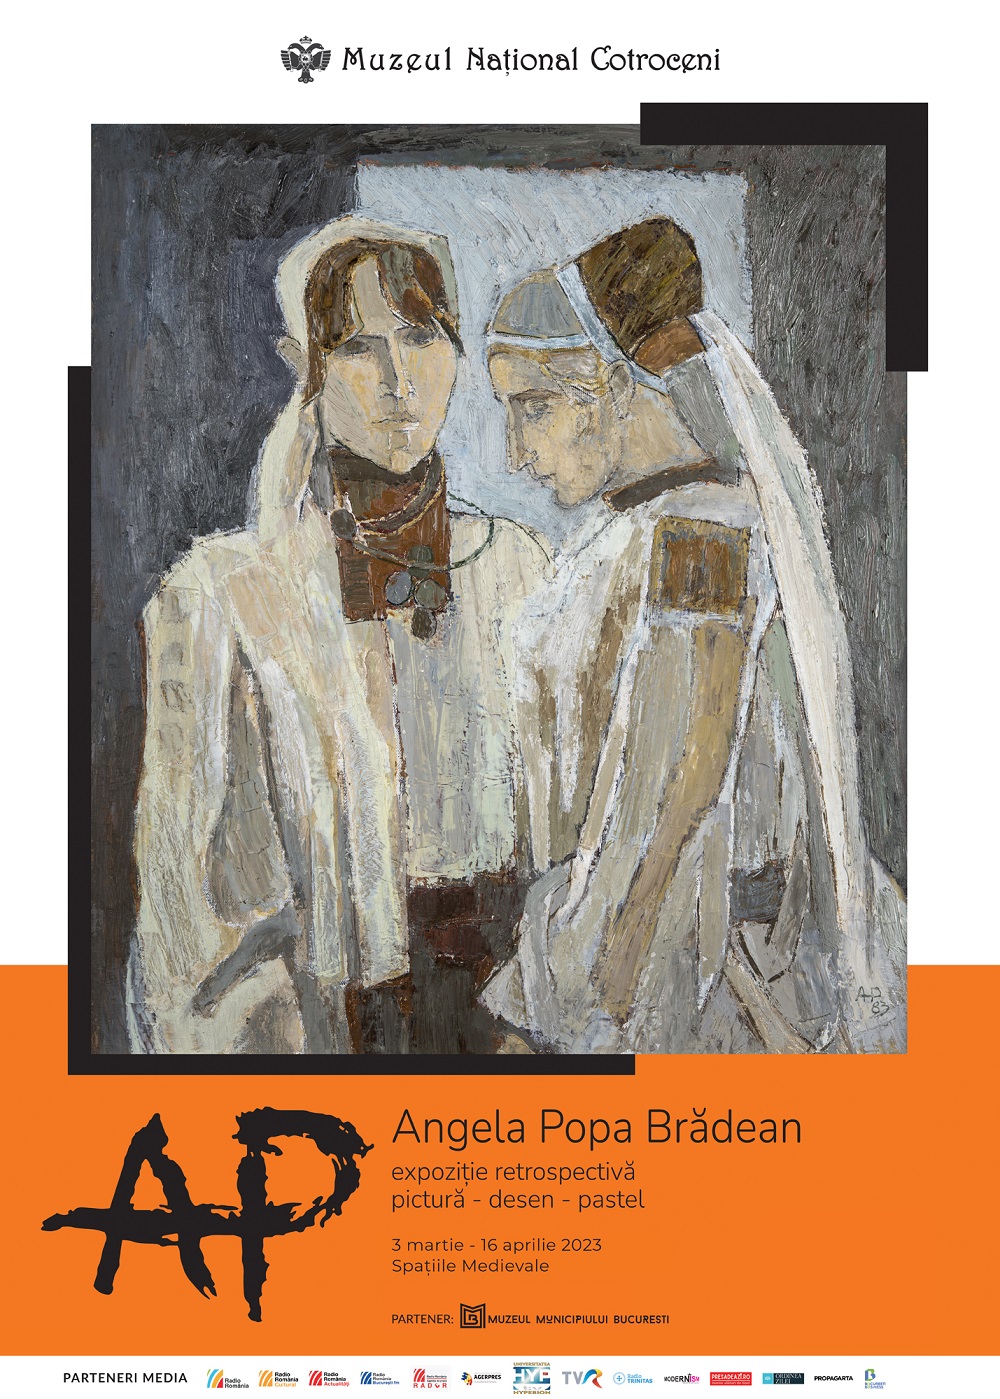 Expozitia Retrospectiva Angela Popa Bradean, la Muzeul National Cotroceni